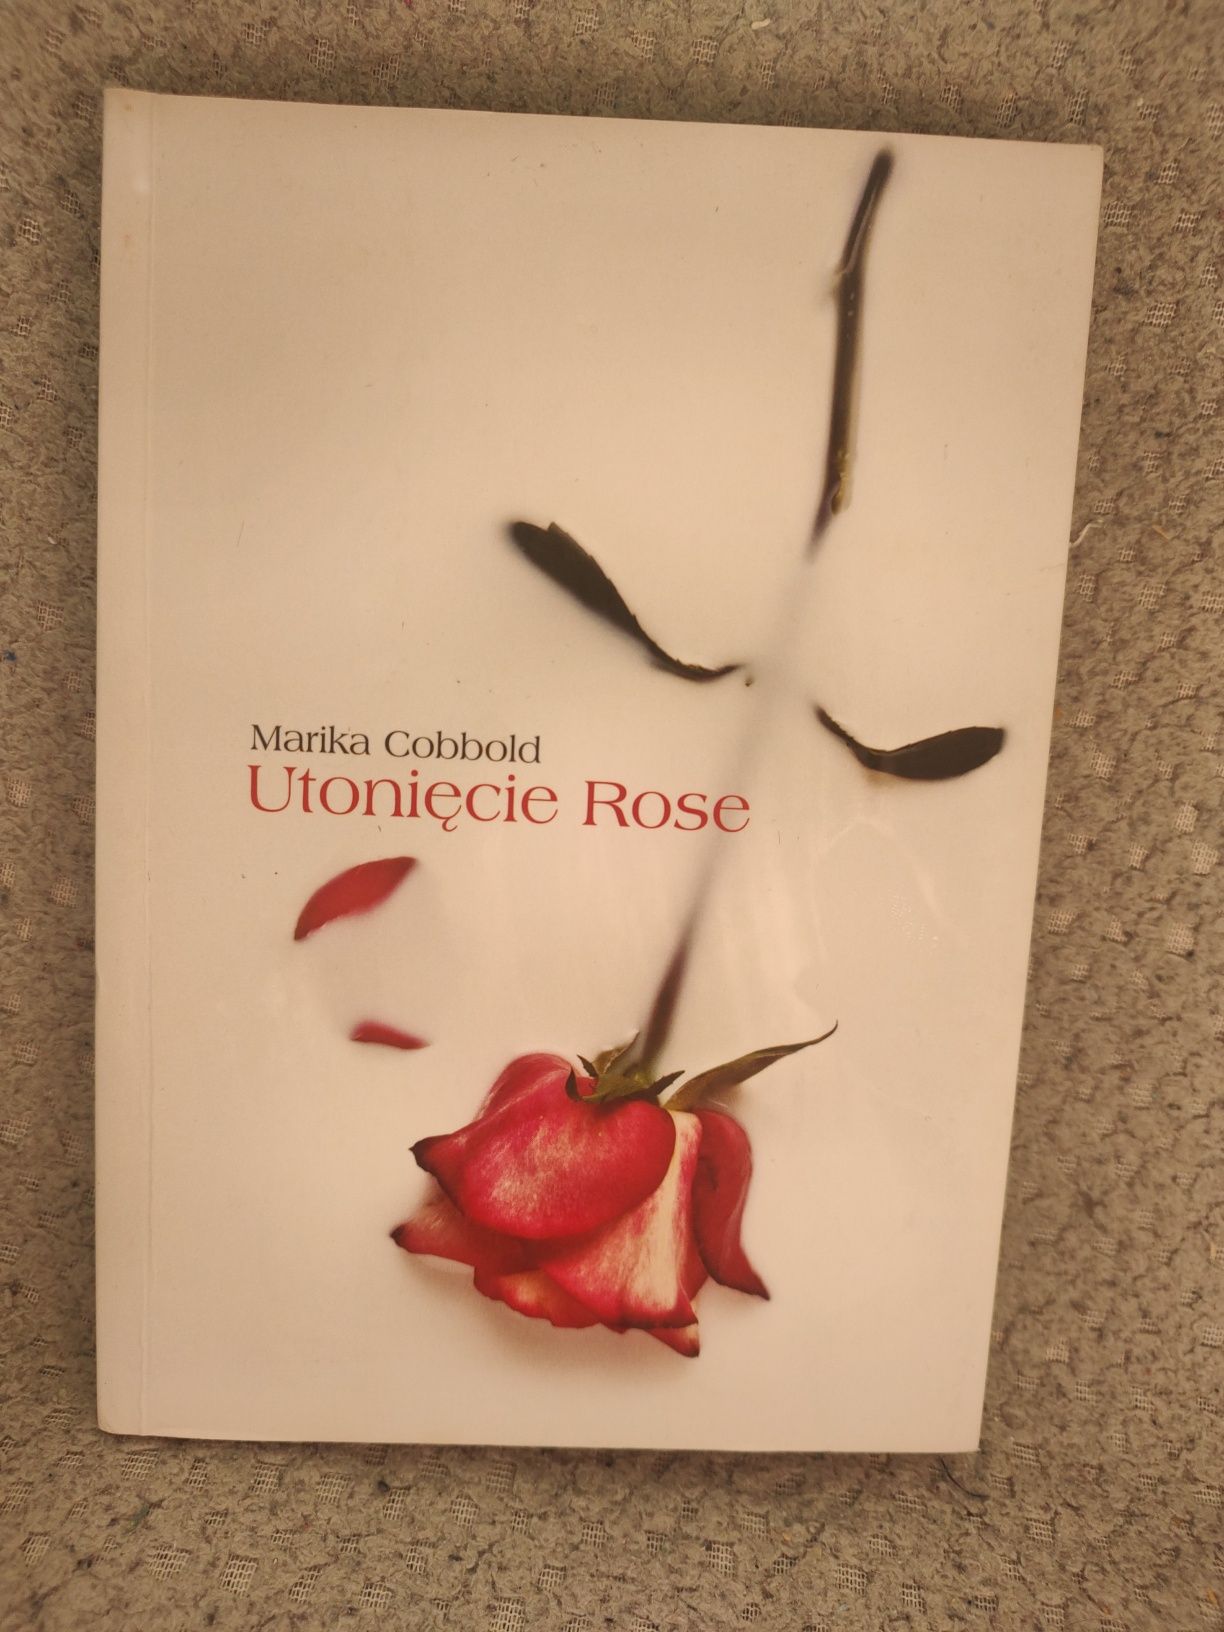 Książka Marika Cobbold "Utonięcie Rose"